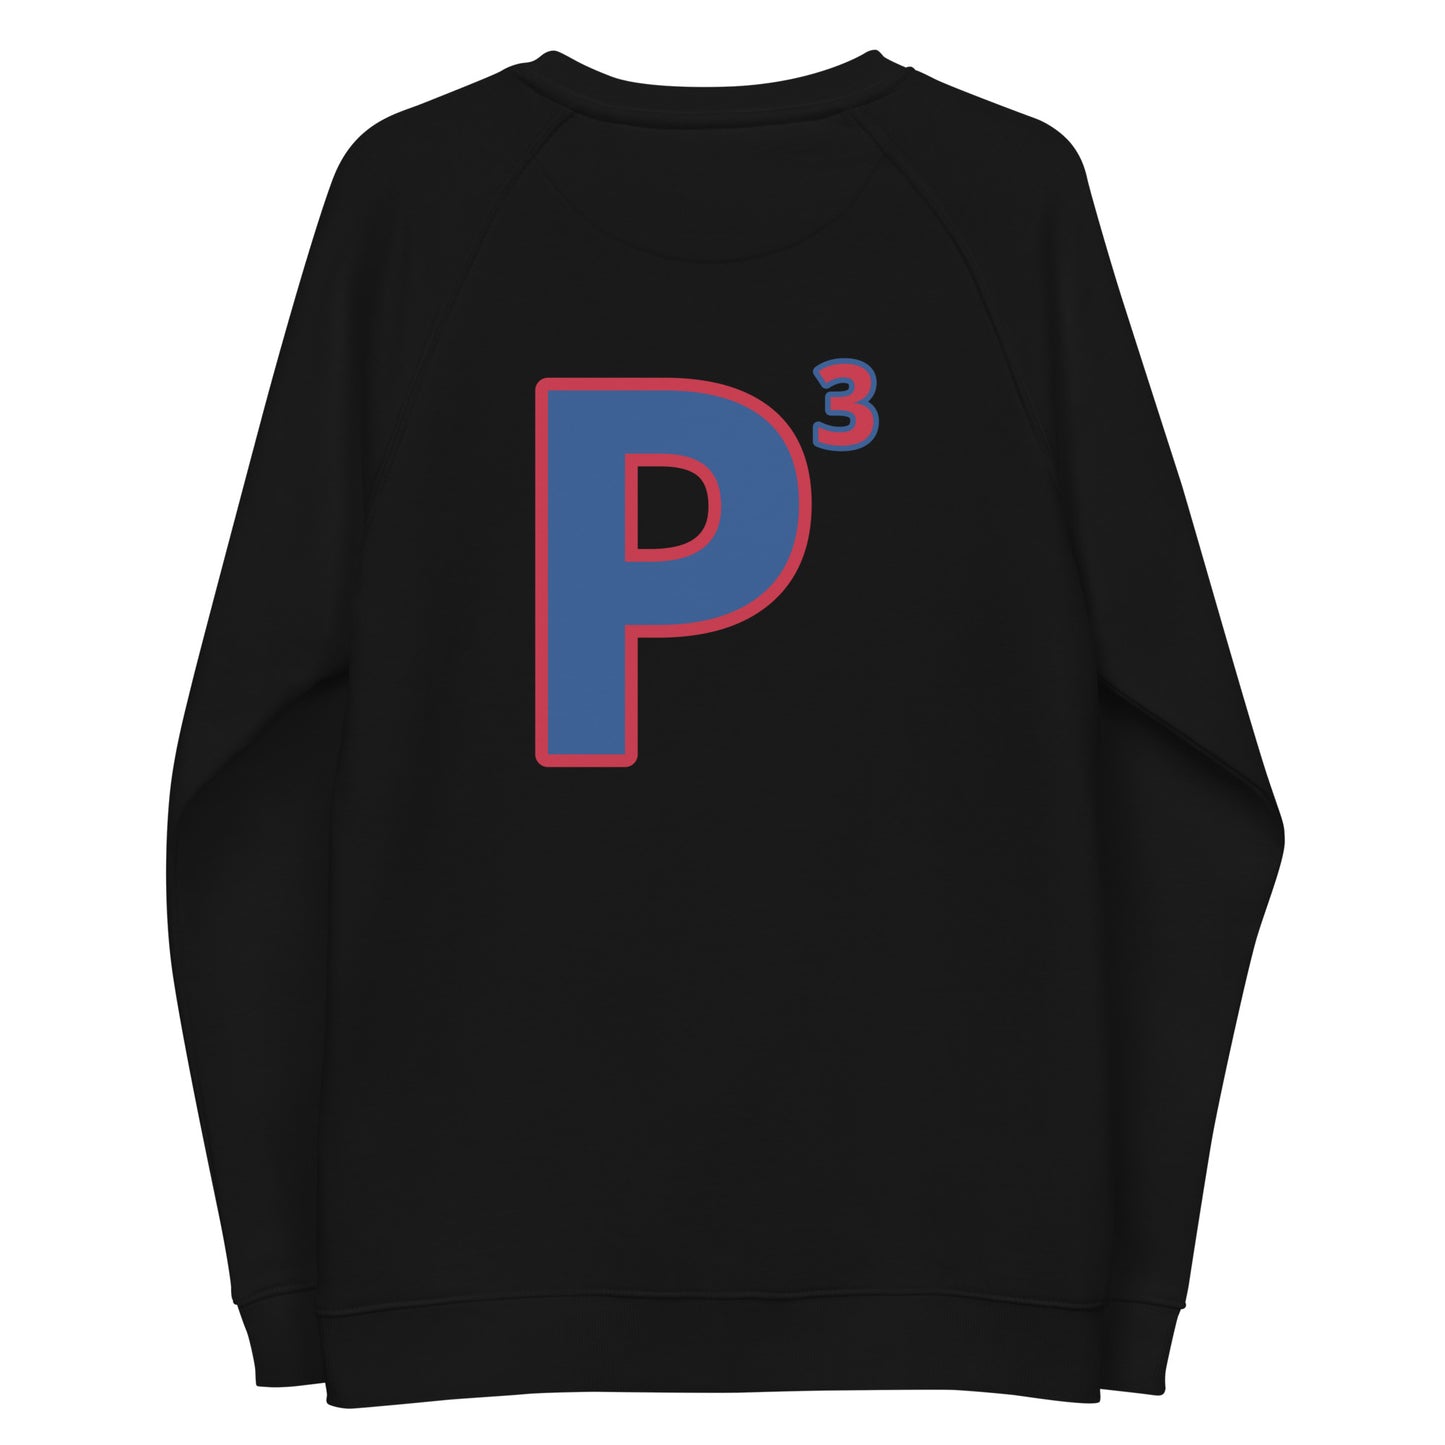 #P3 PPP Unisex organic raglan sweatshirt